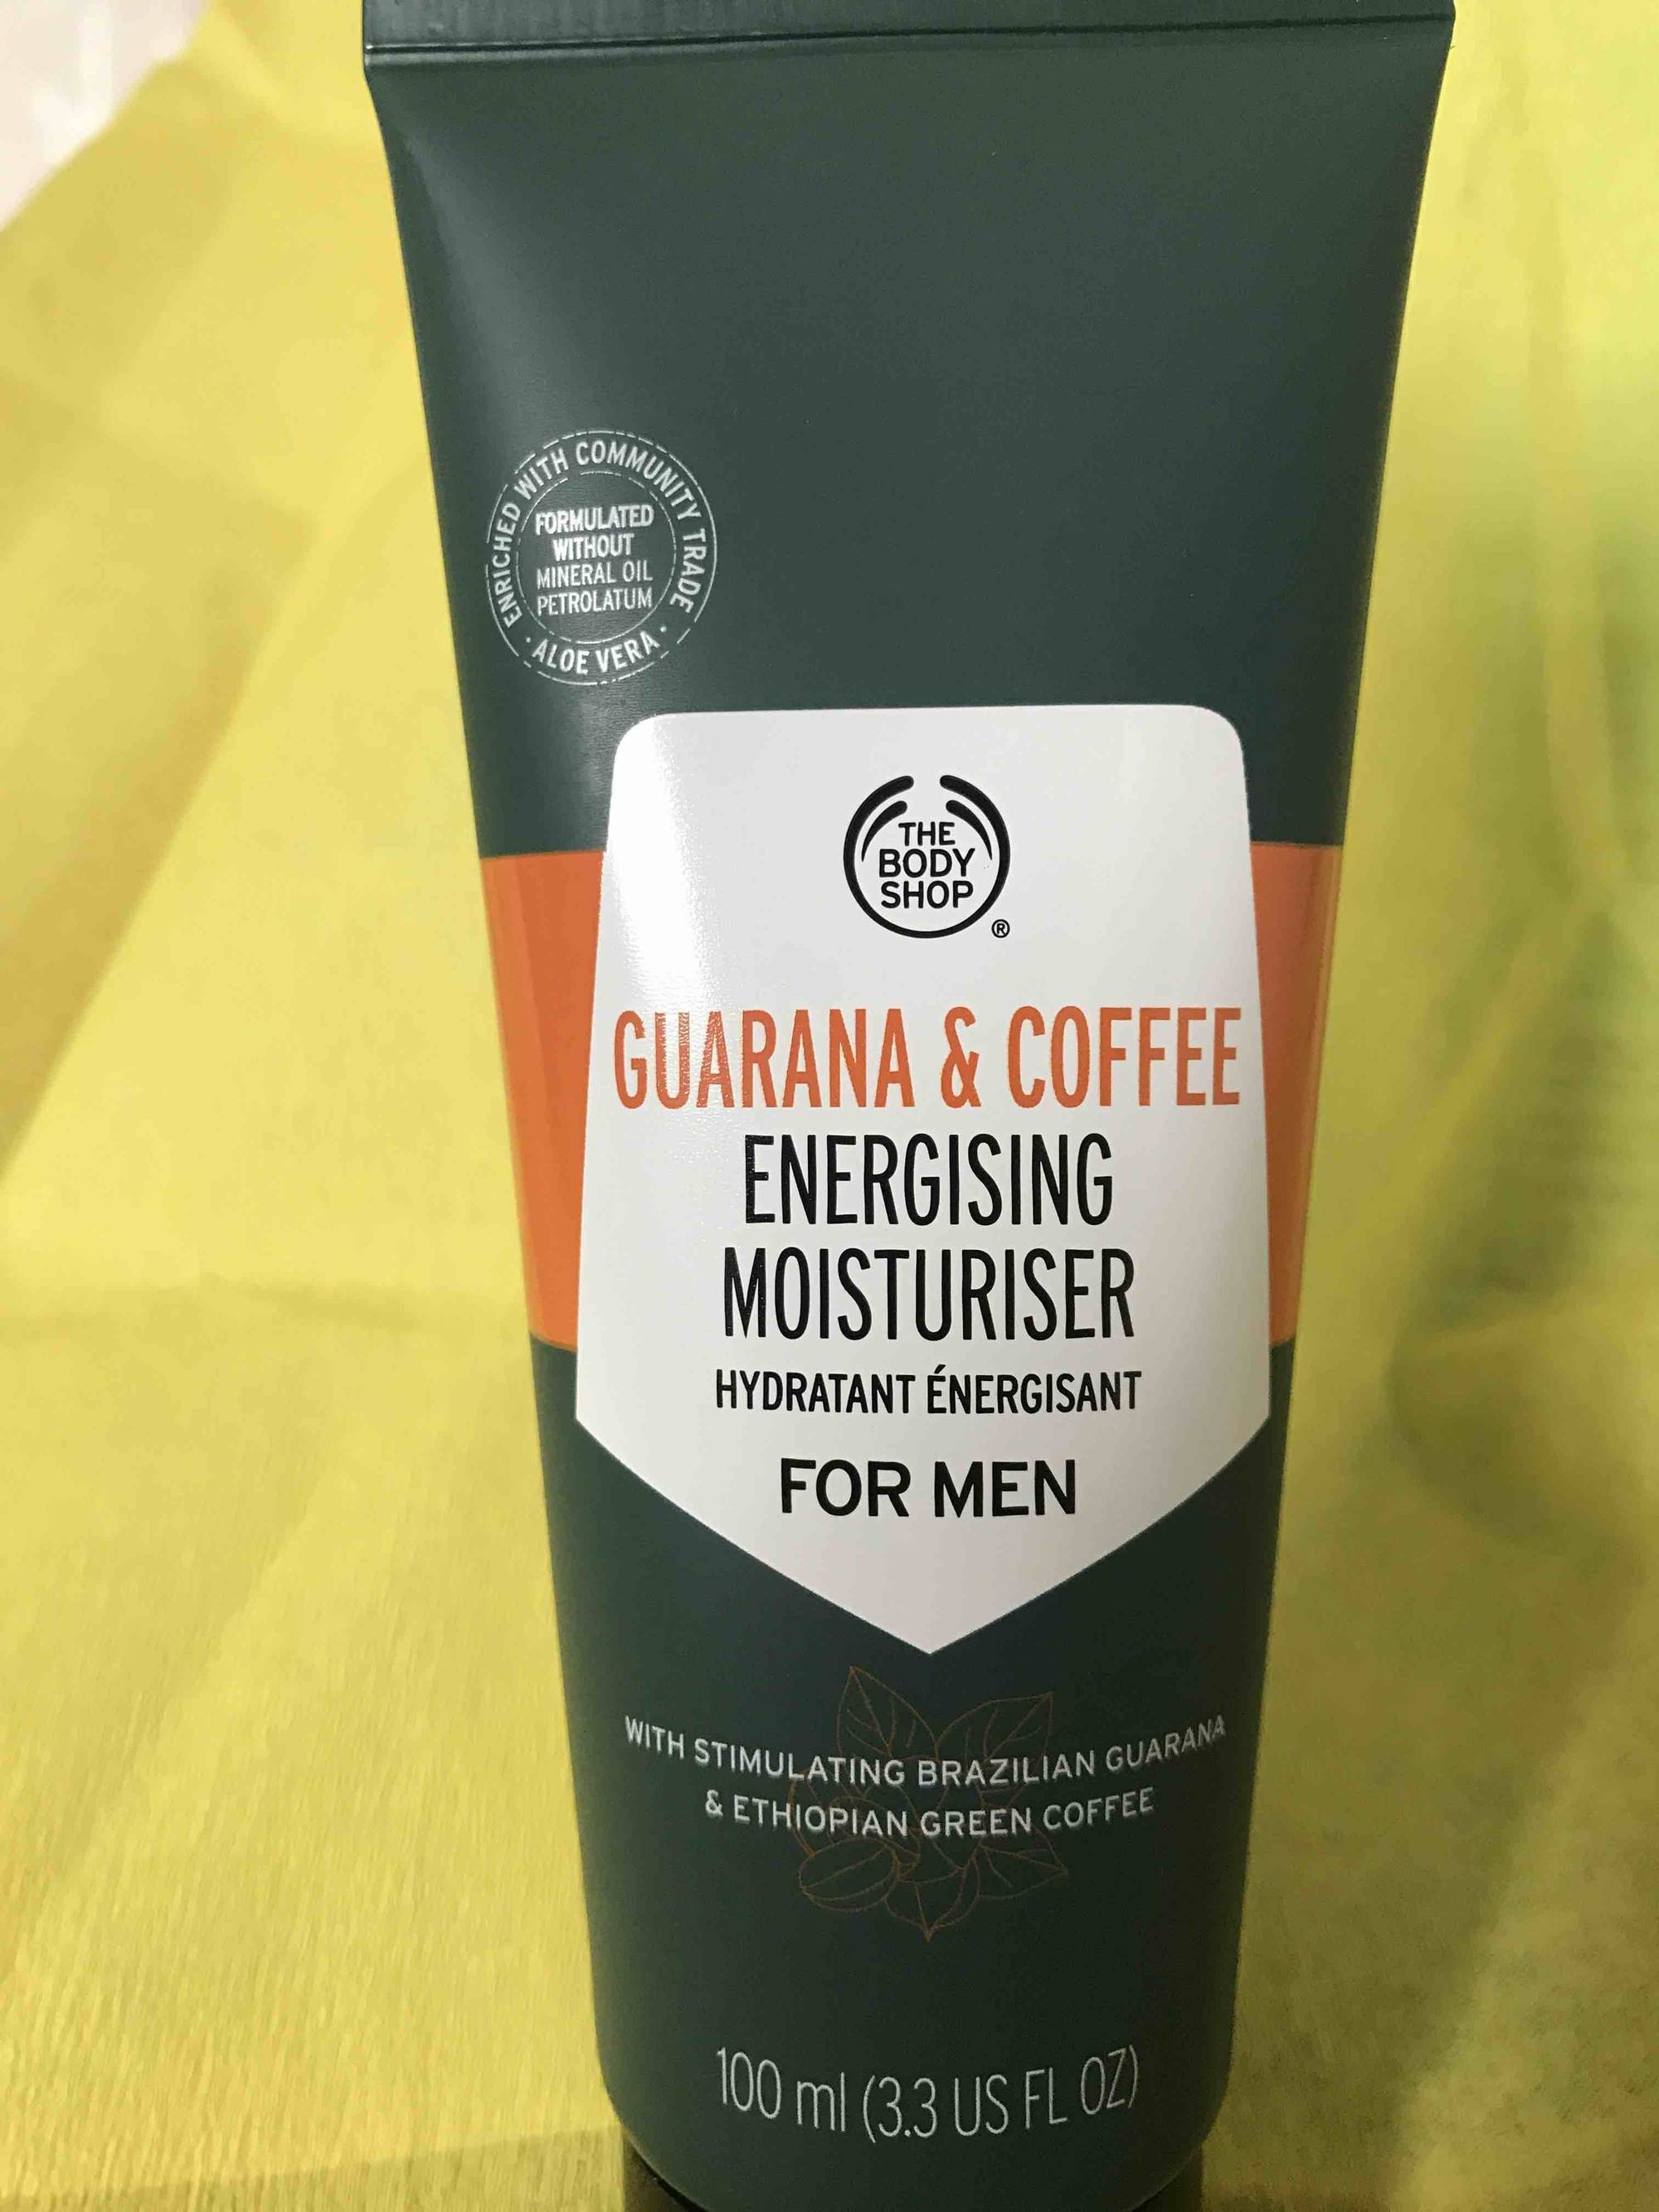 THE BODY SHOP - Guarana & coffee - Energising moisturiser for men 